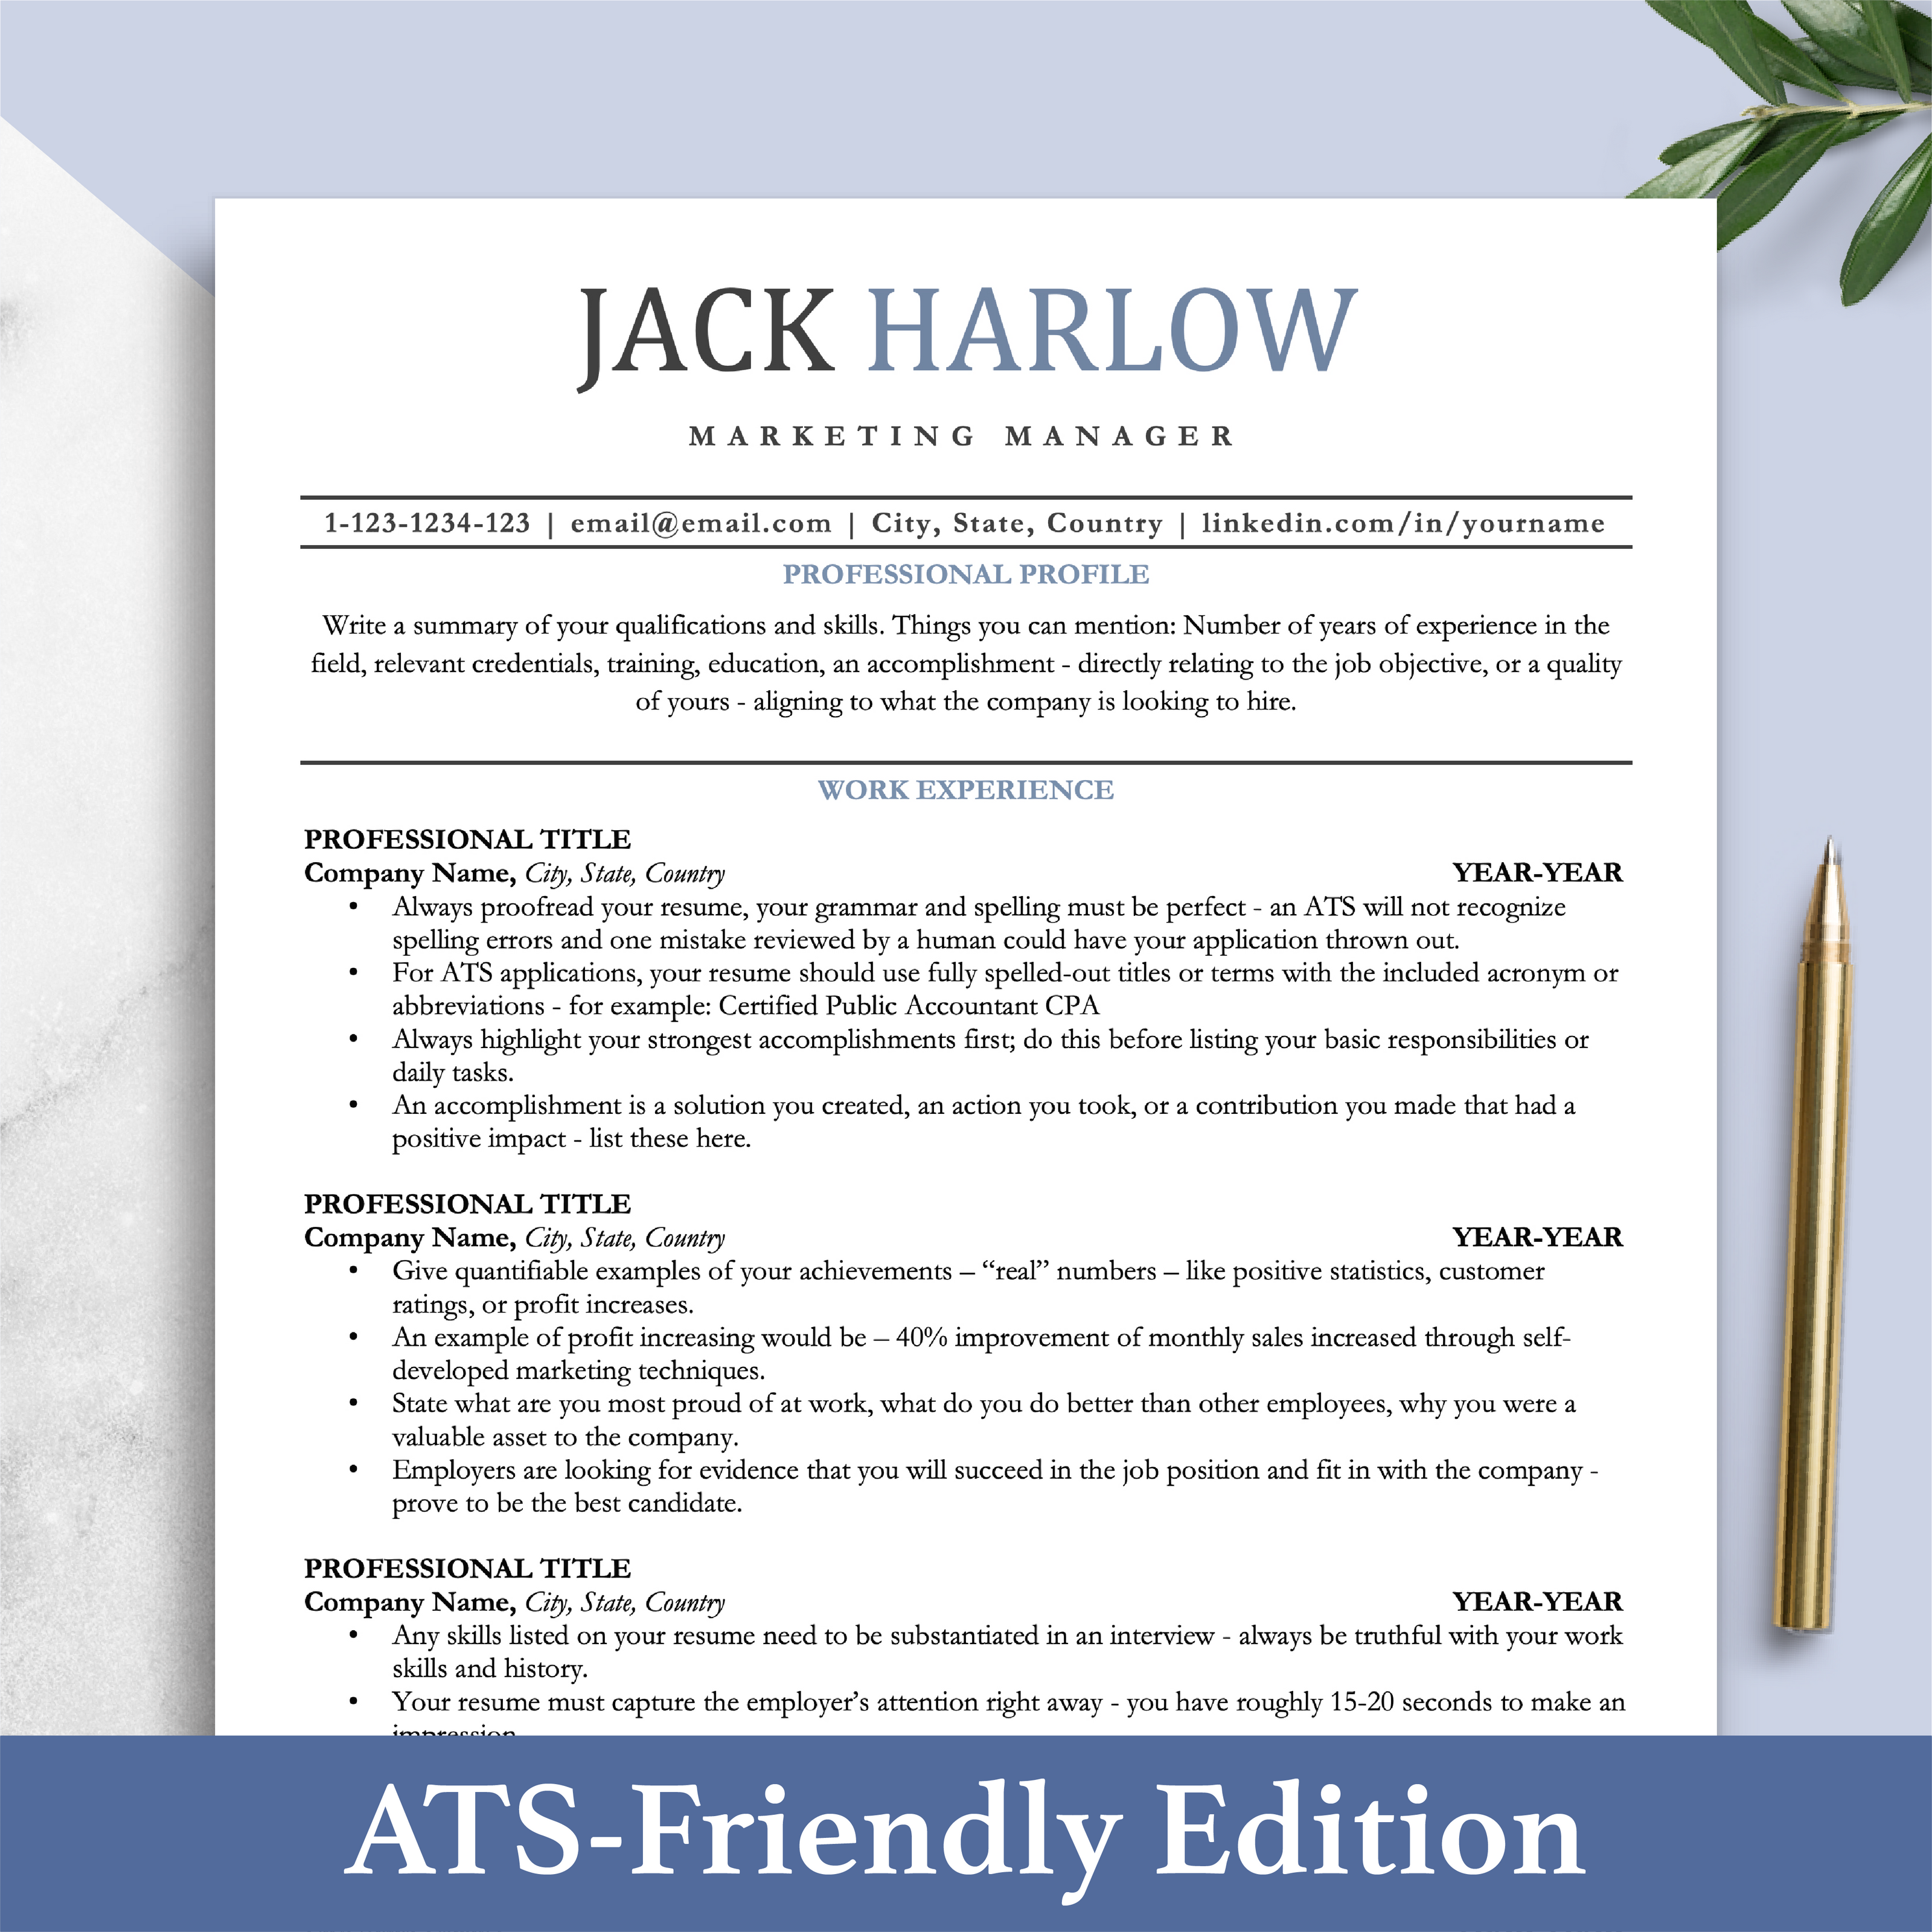 The Art of Resume Template | Blue ATS friendly resume cv template design